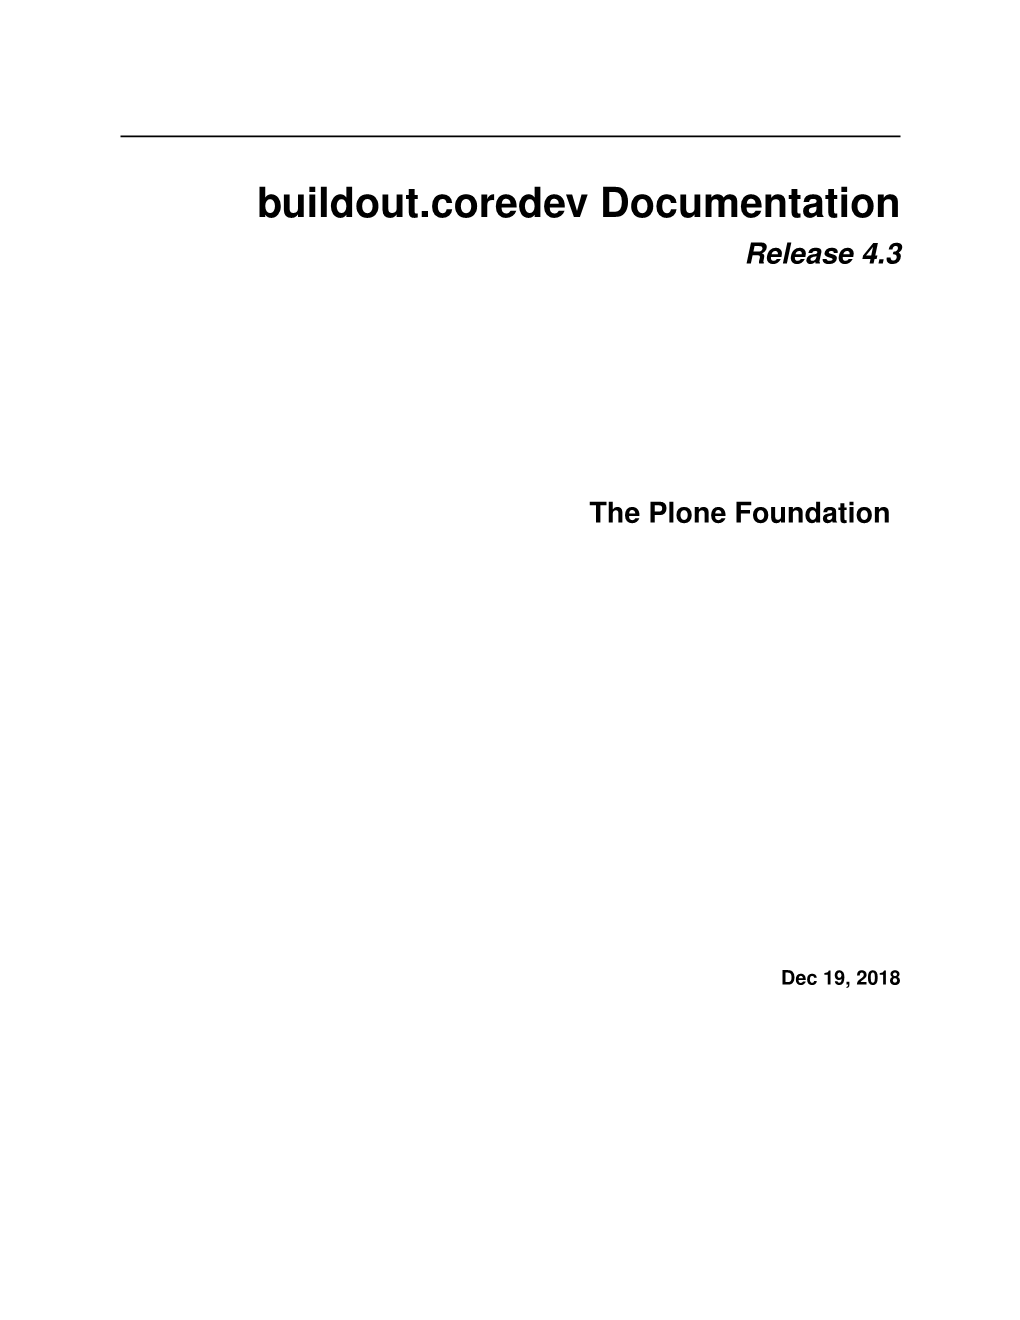 Buildout.Coredev Documentation Release 4.3